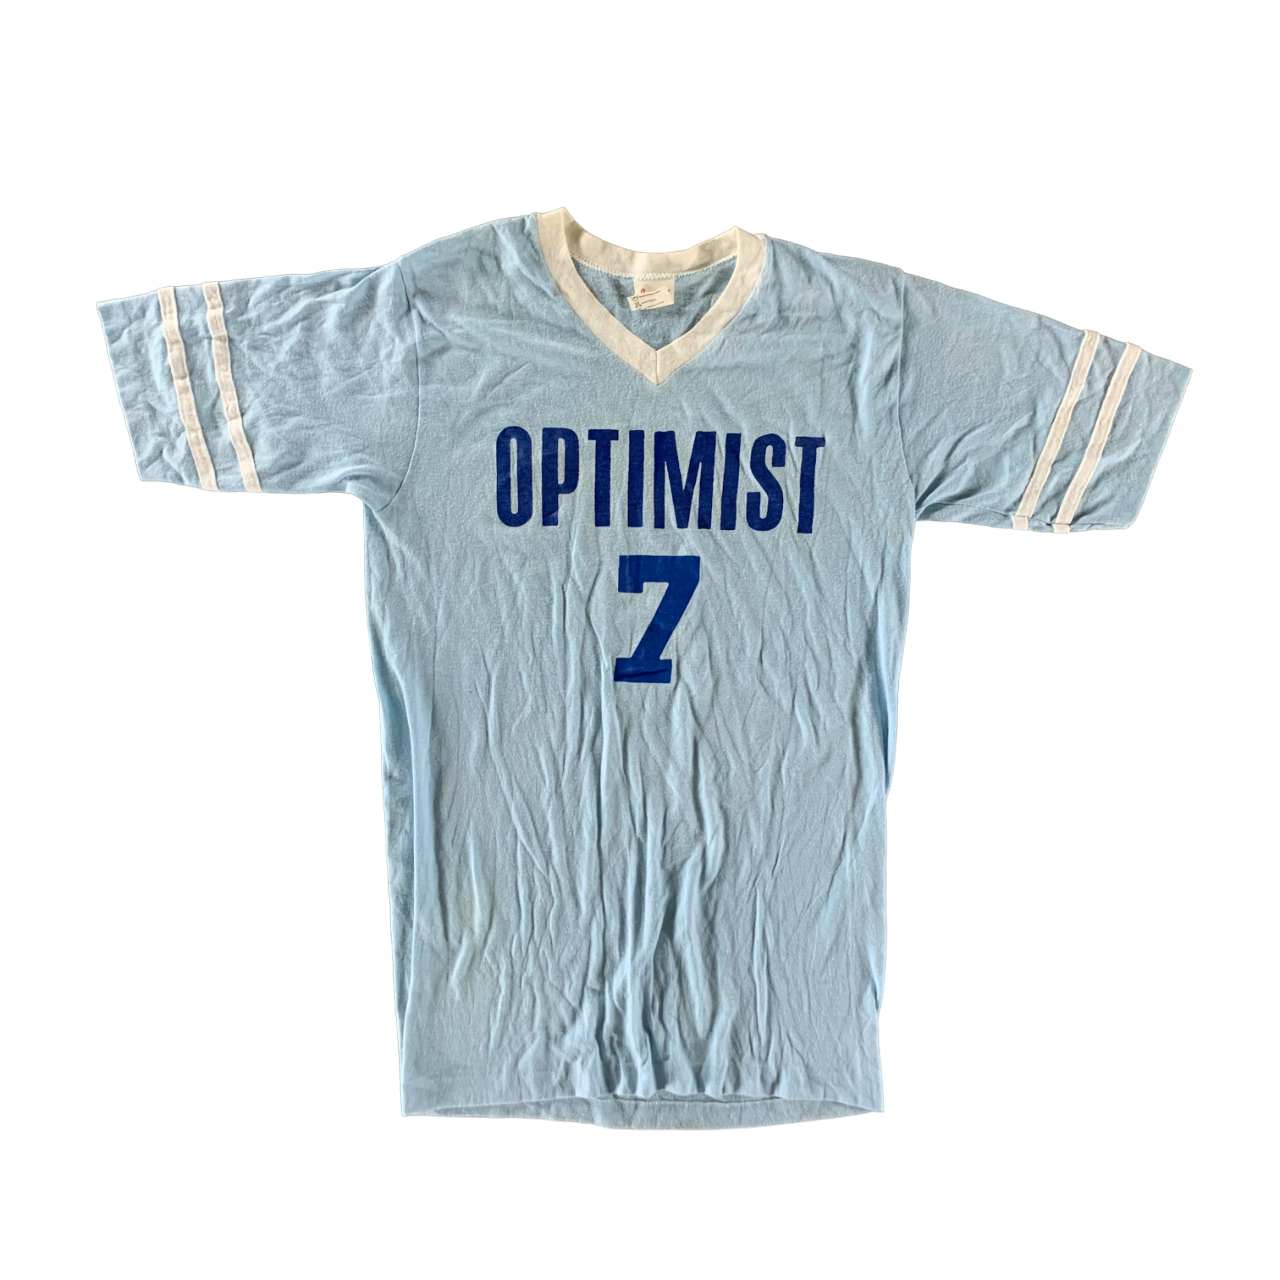 Vintage 1980s Optimist T-shirt size Medium